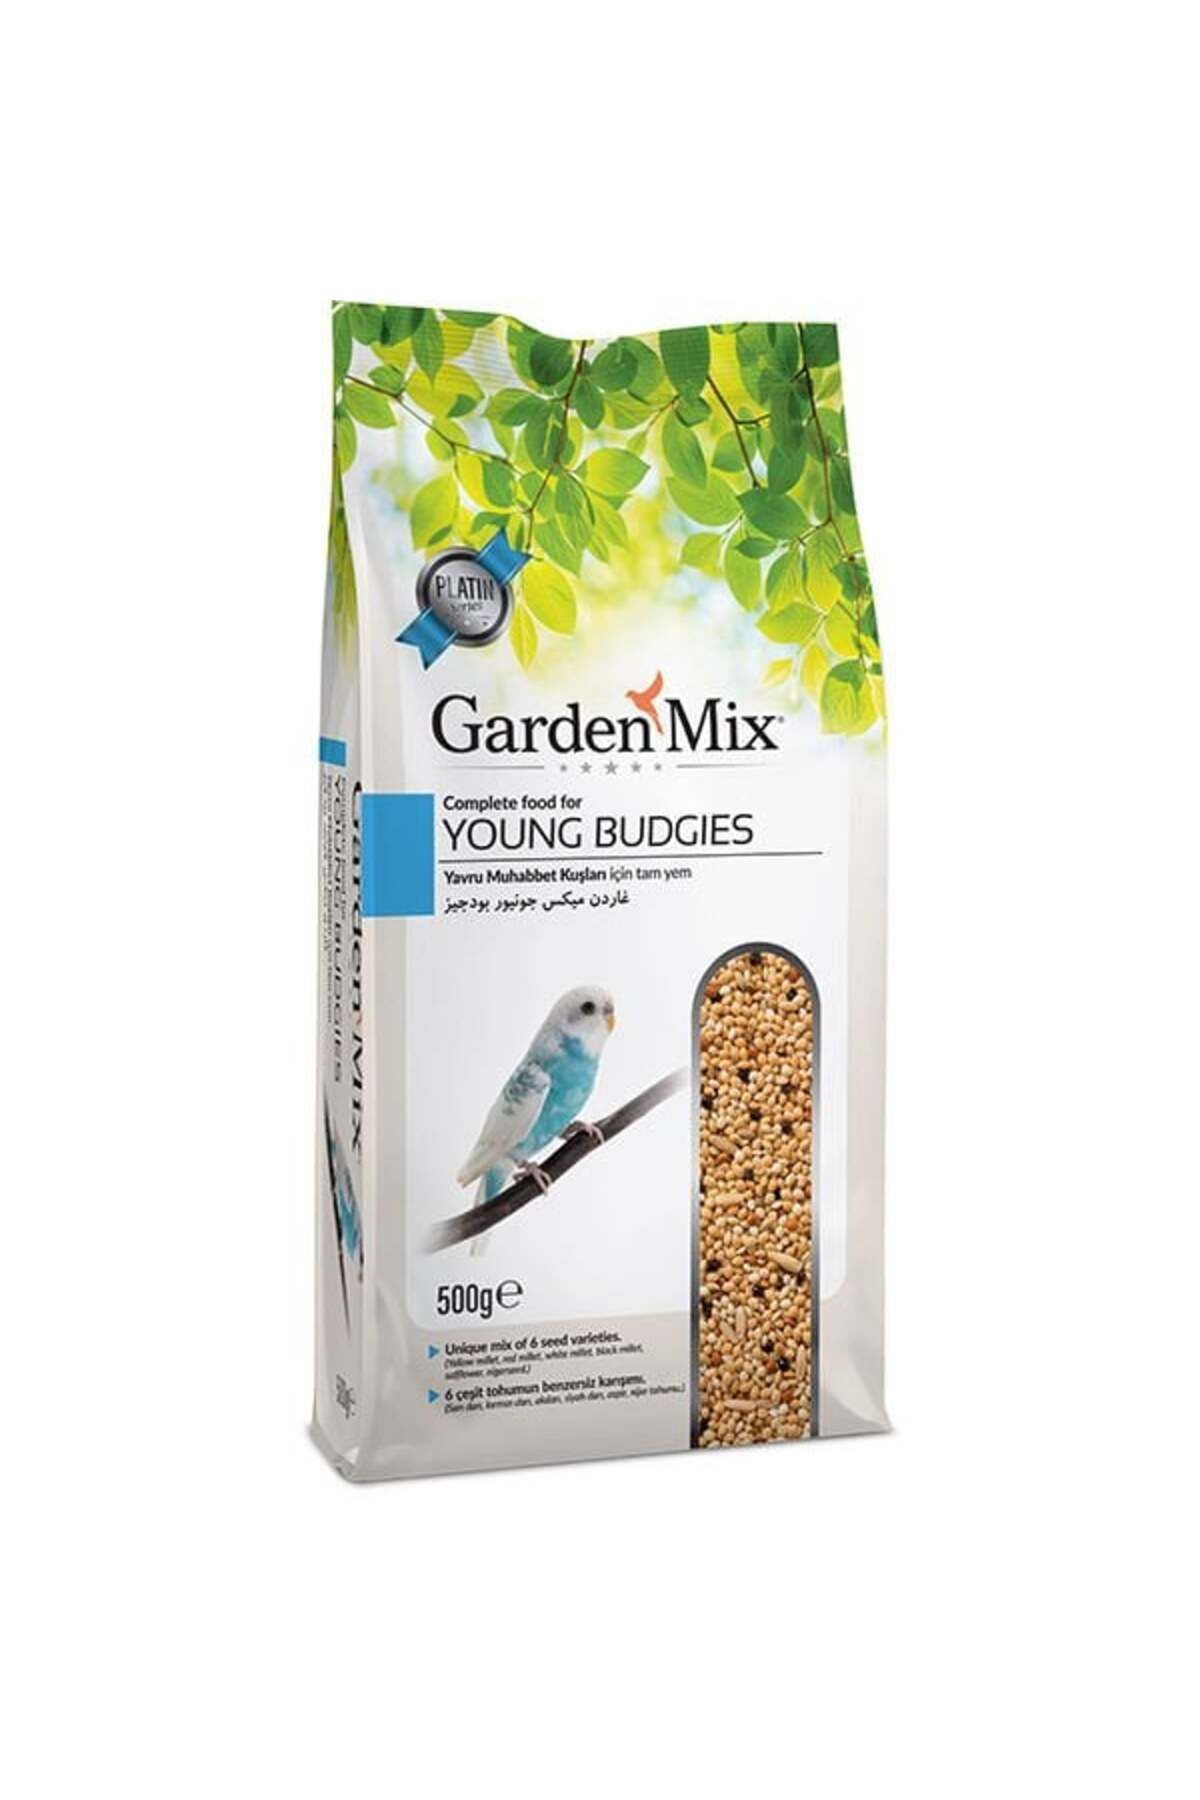 Gardenmix Garden Mix Platin Yavru Muhabbet Kuş Yemi 500 Gr - 900-013